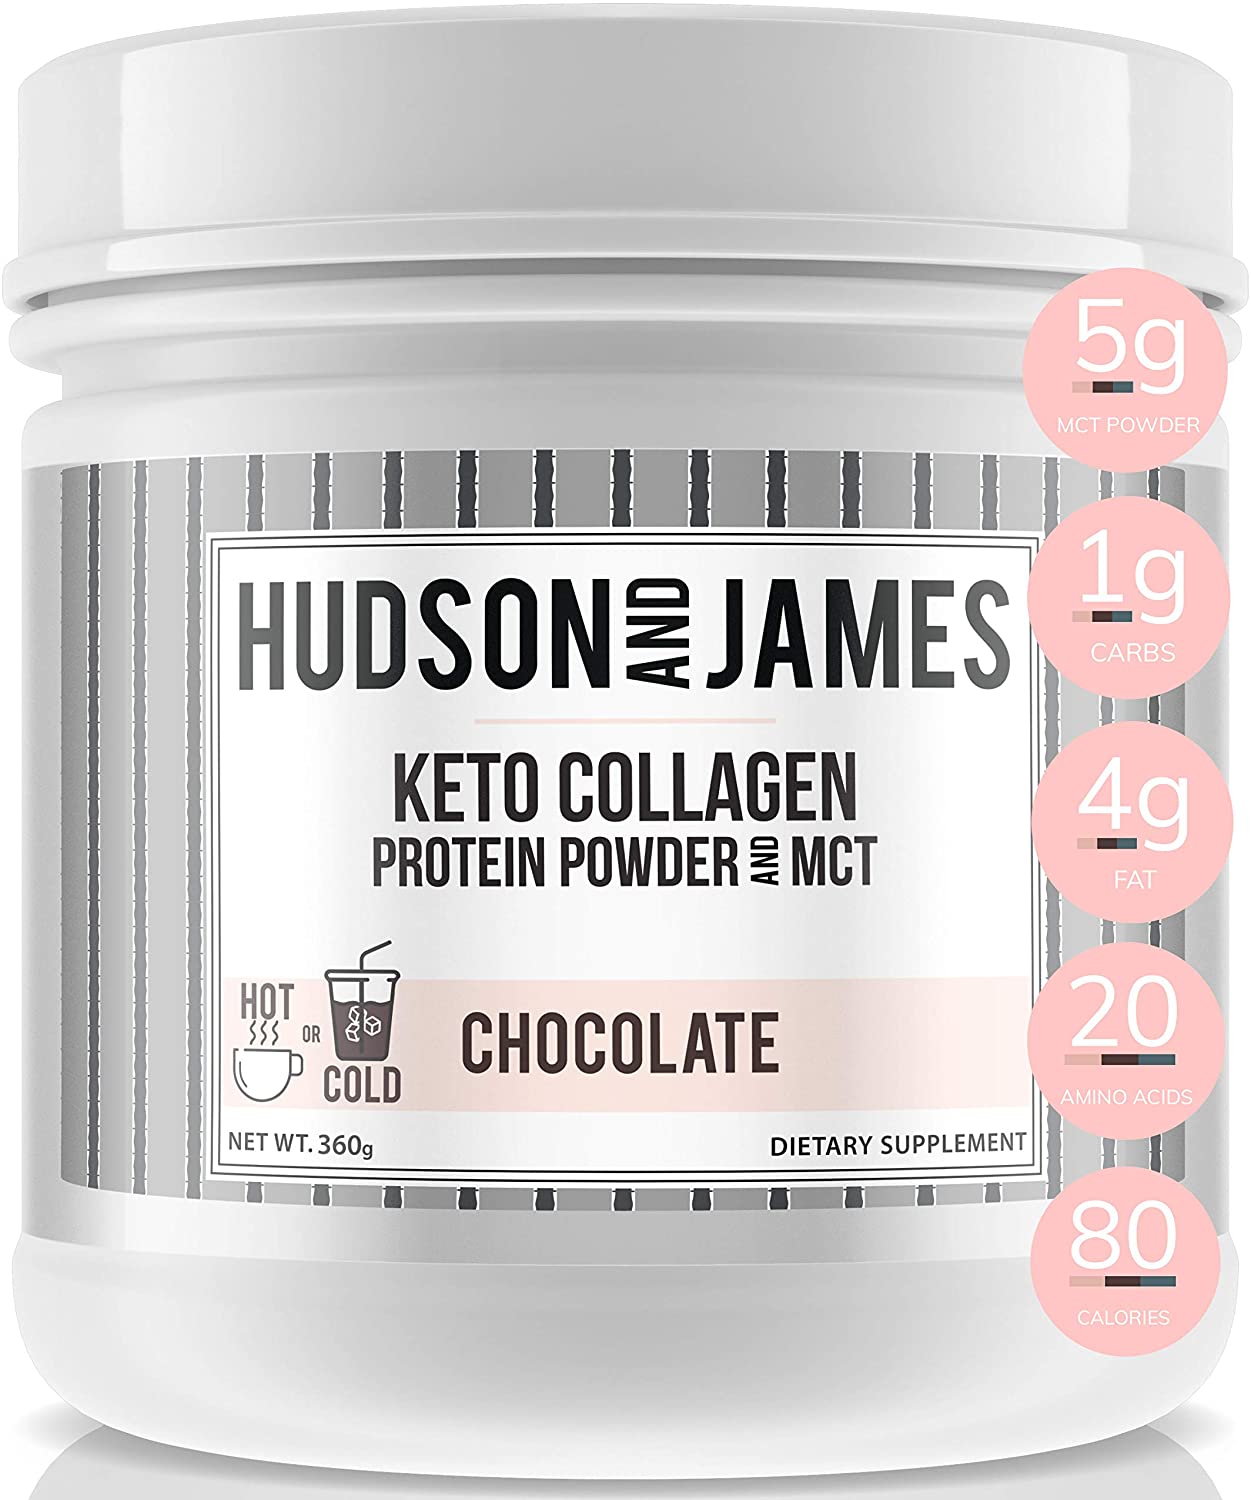 ~Hudson and James – KETO Collagen Protein Powder & MCT!